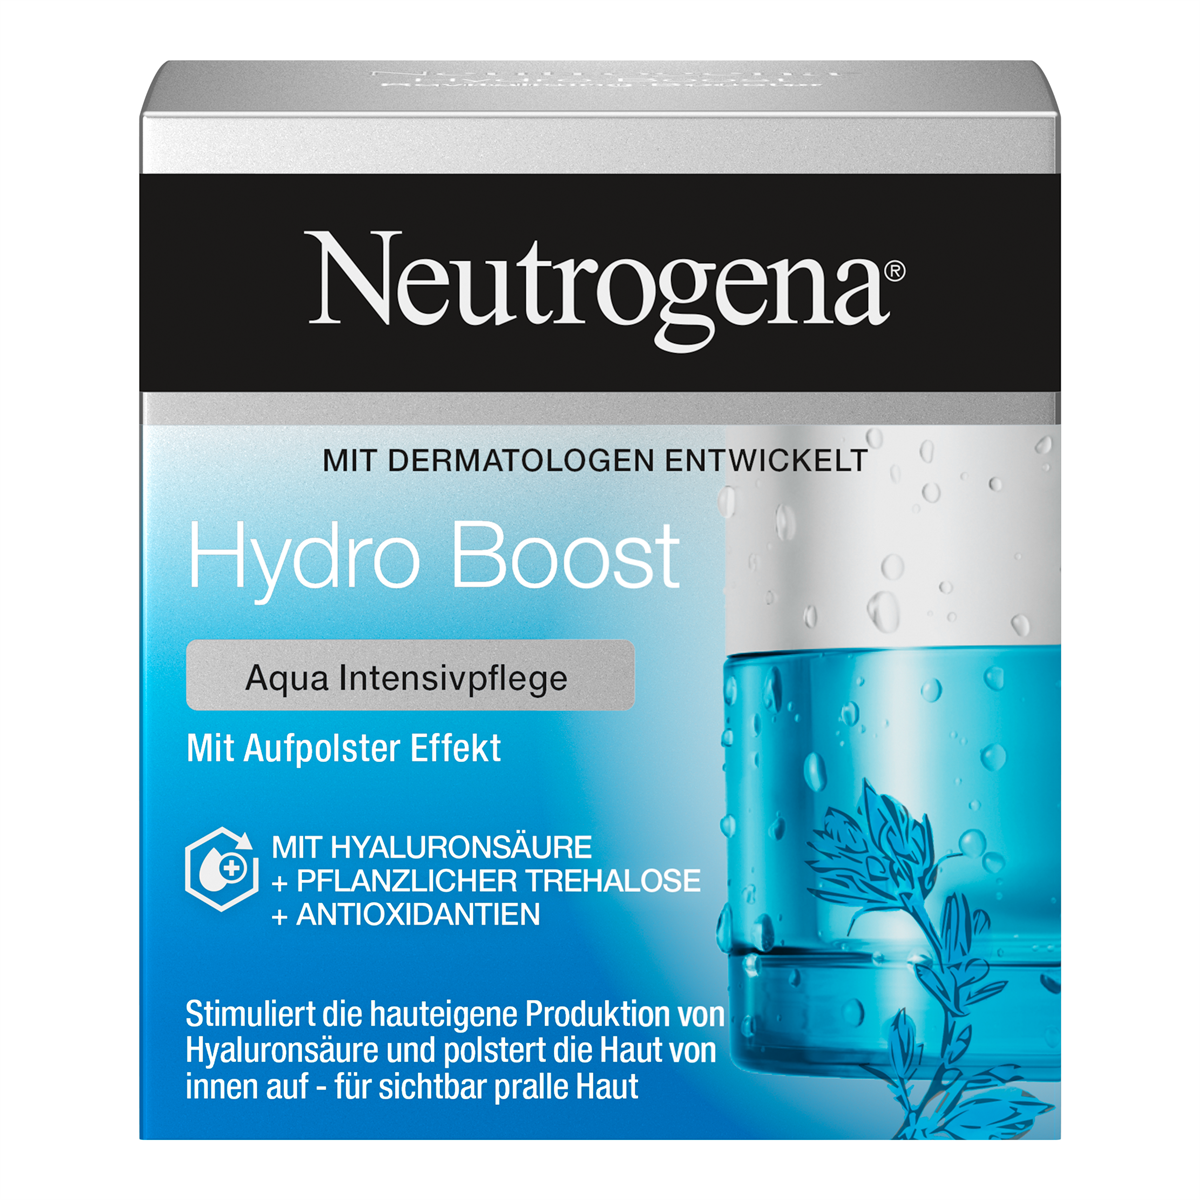 Neutrogena Hydro Boost Aqua Intensivpflege 50ml